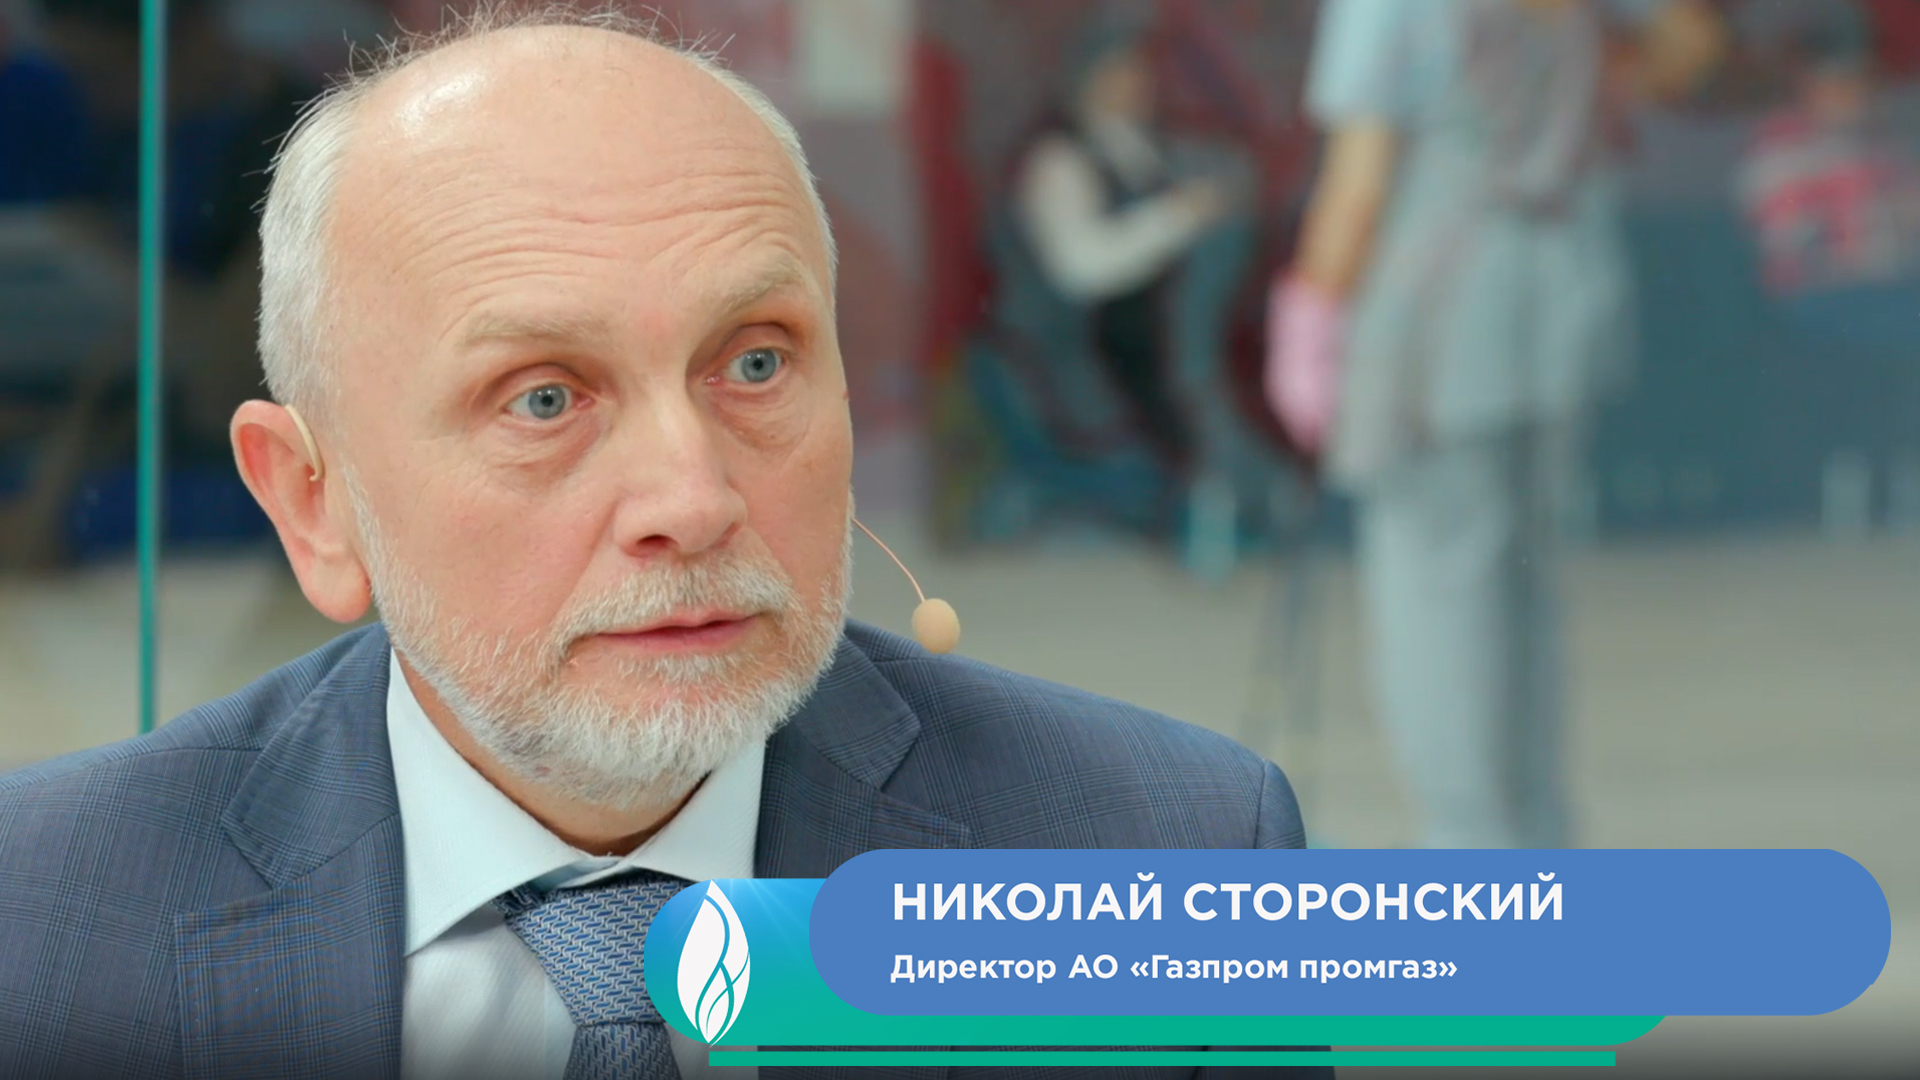 Николай Сторонский, директор АО «Газпром промгаз»